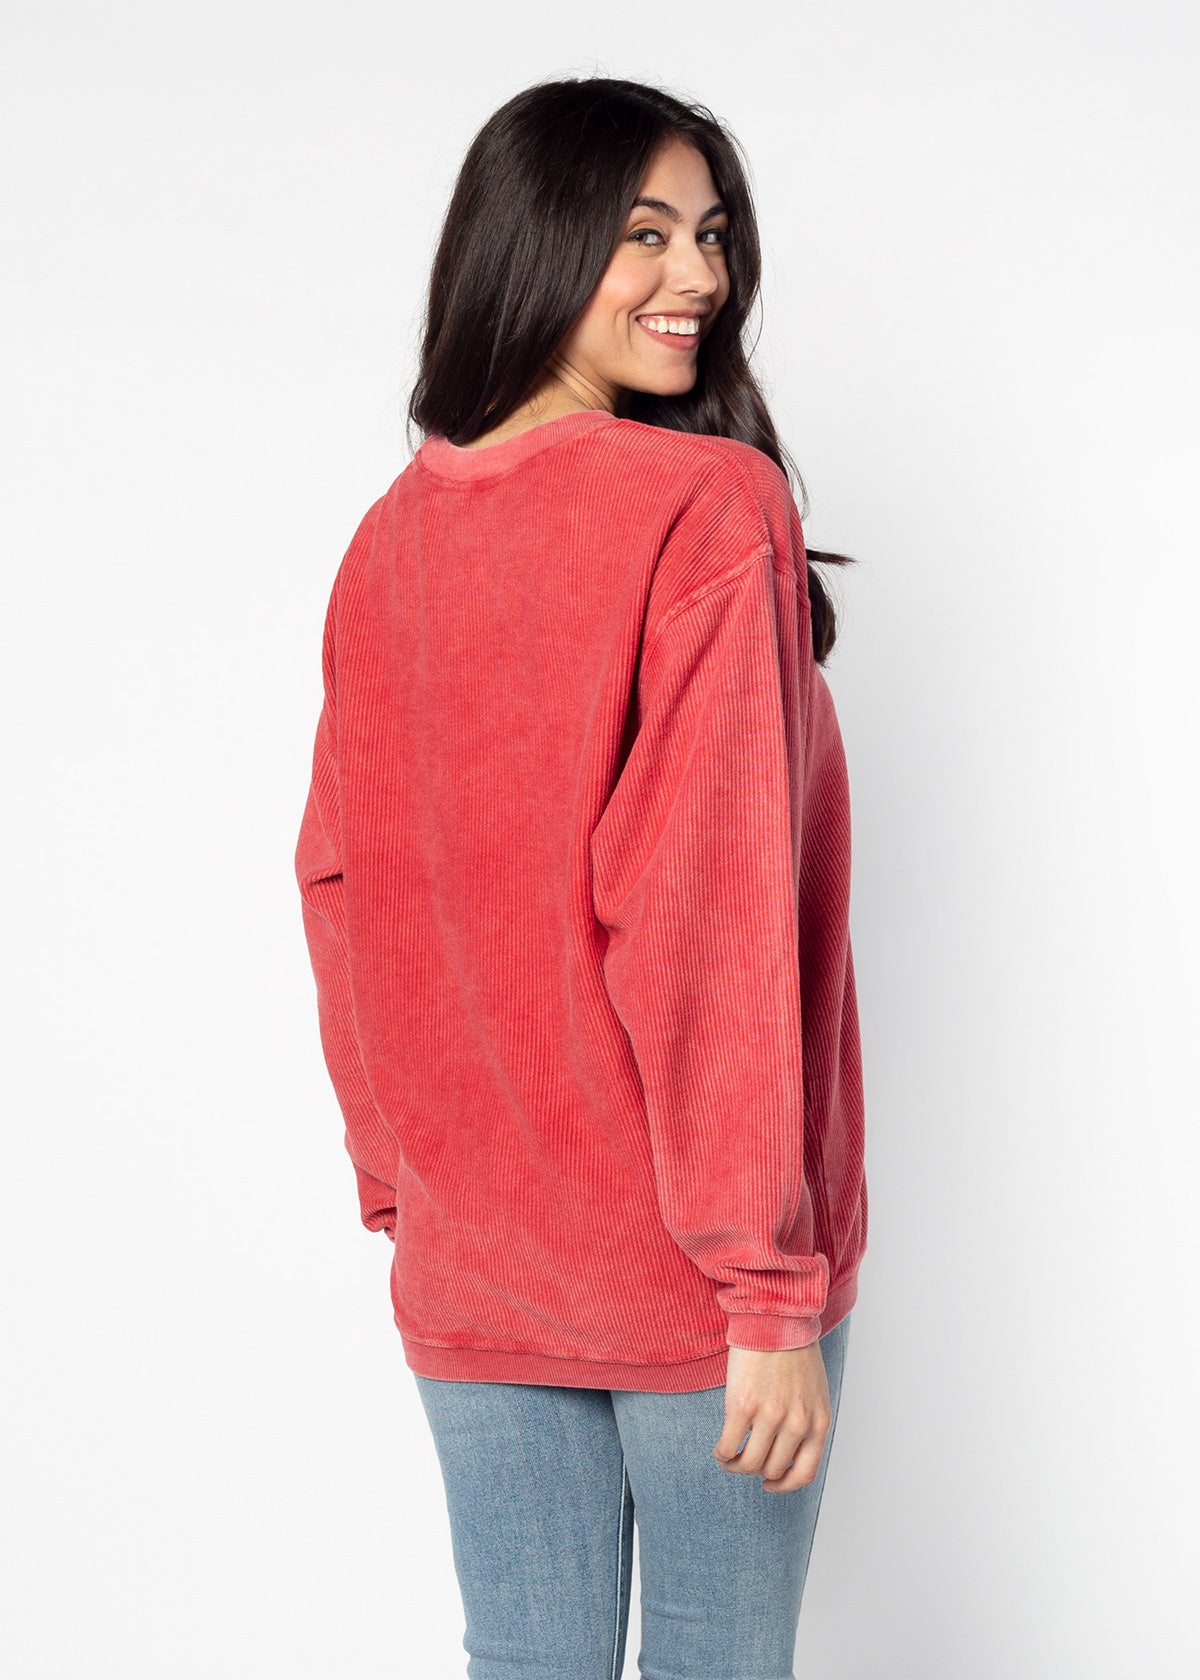 Corded Sweatshirt Alabama Crimson Tide in Crimson